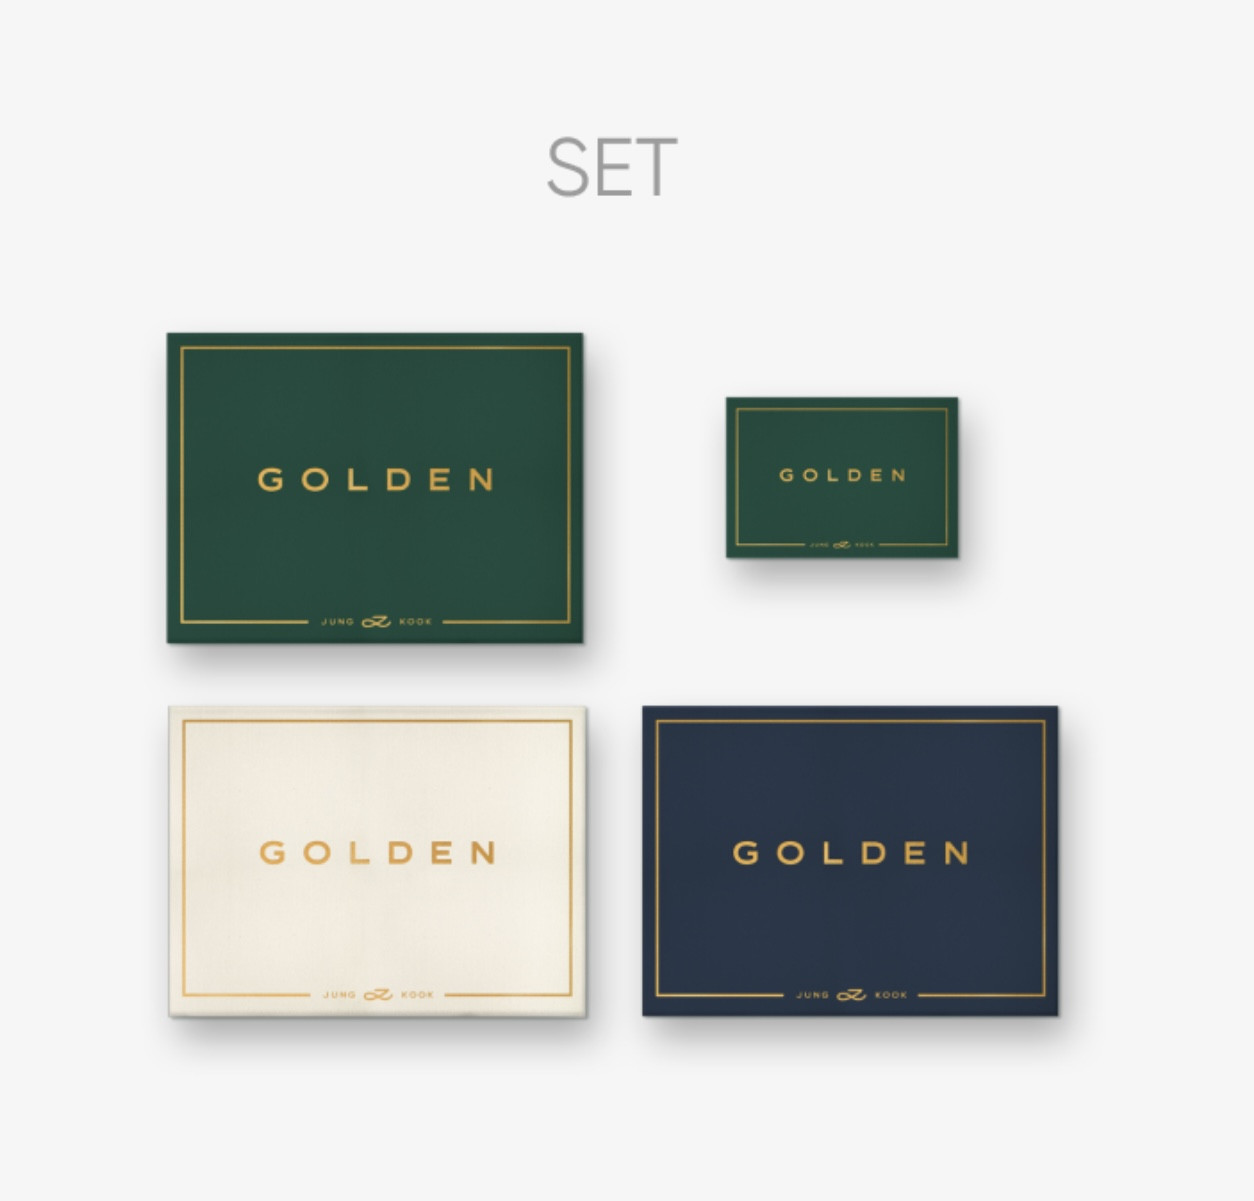 [PRE-ORDER] JUNGKOOK (BTS) 'GOLDEN' OFFICIAL MUSIC ALBUM